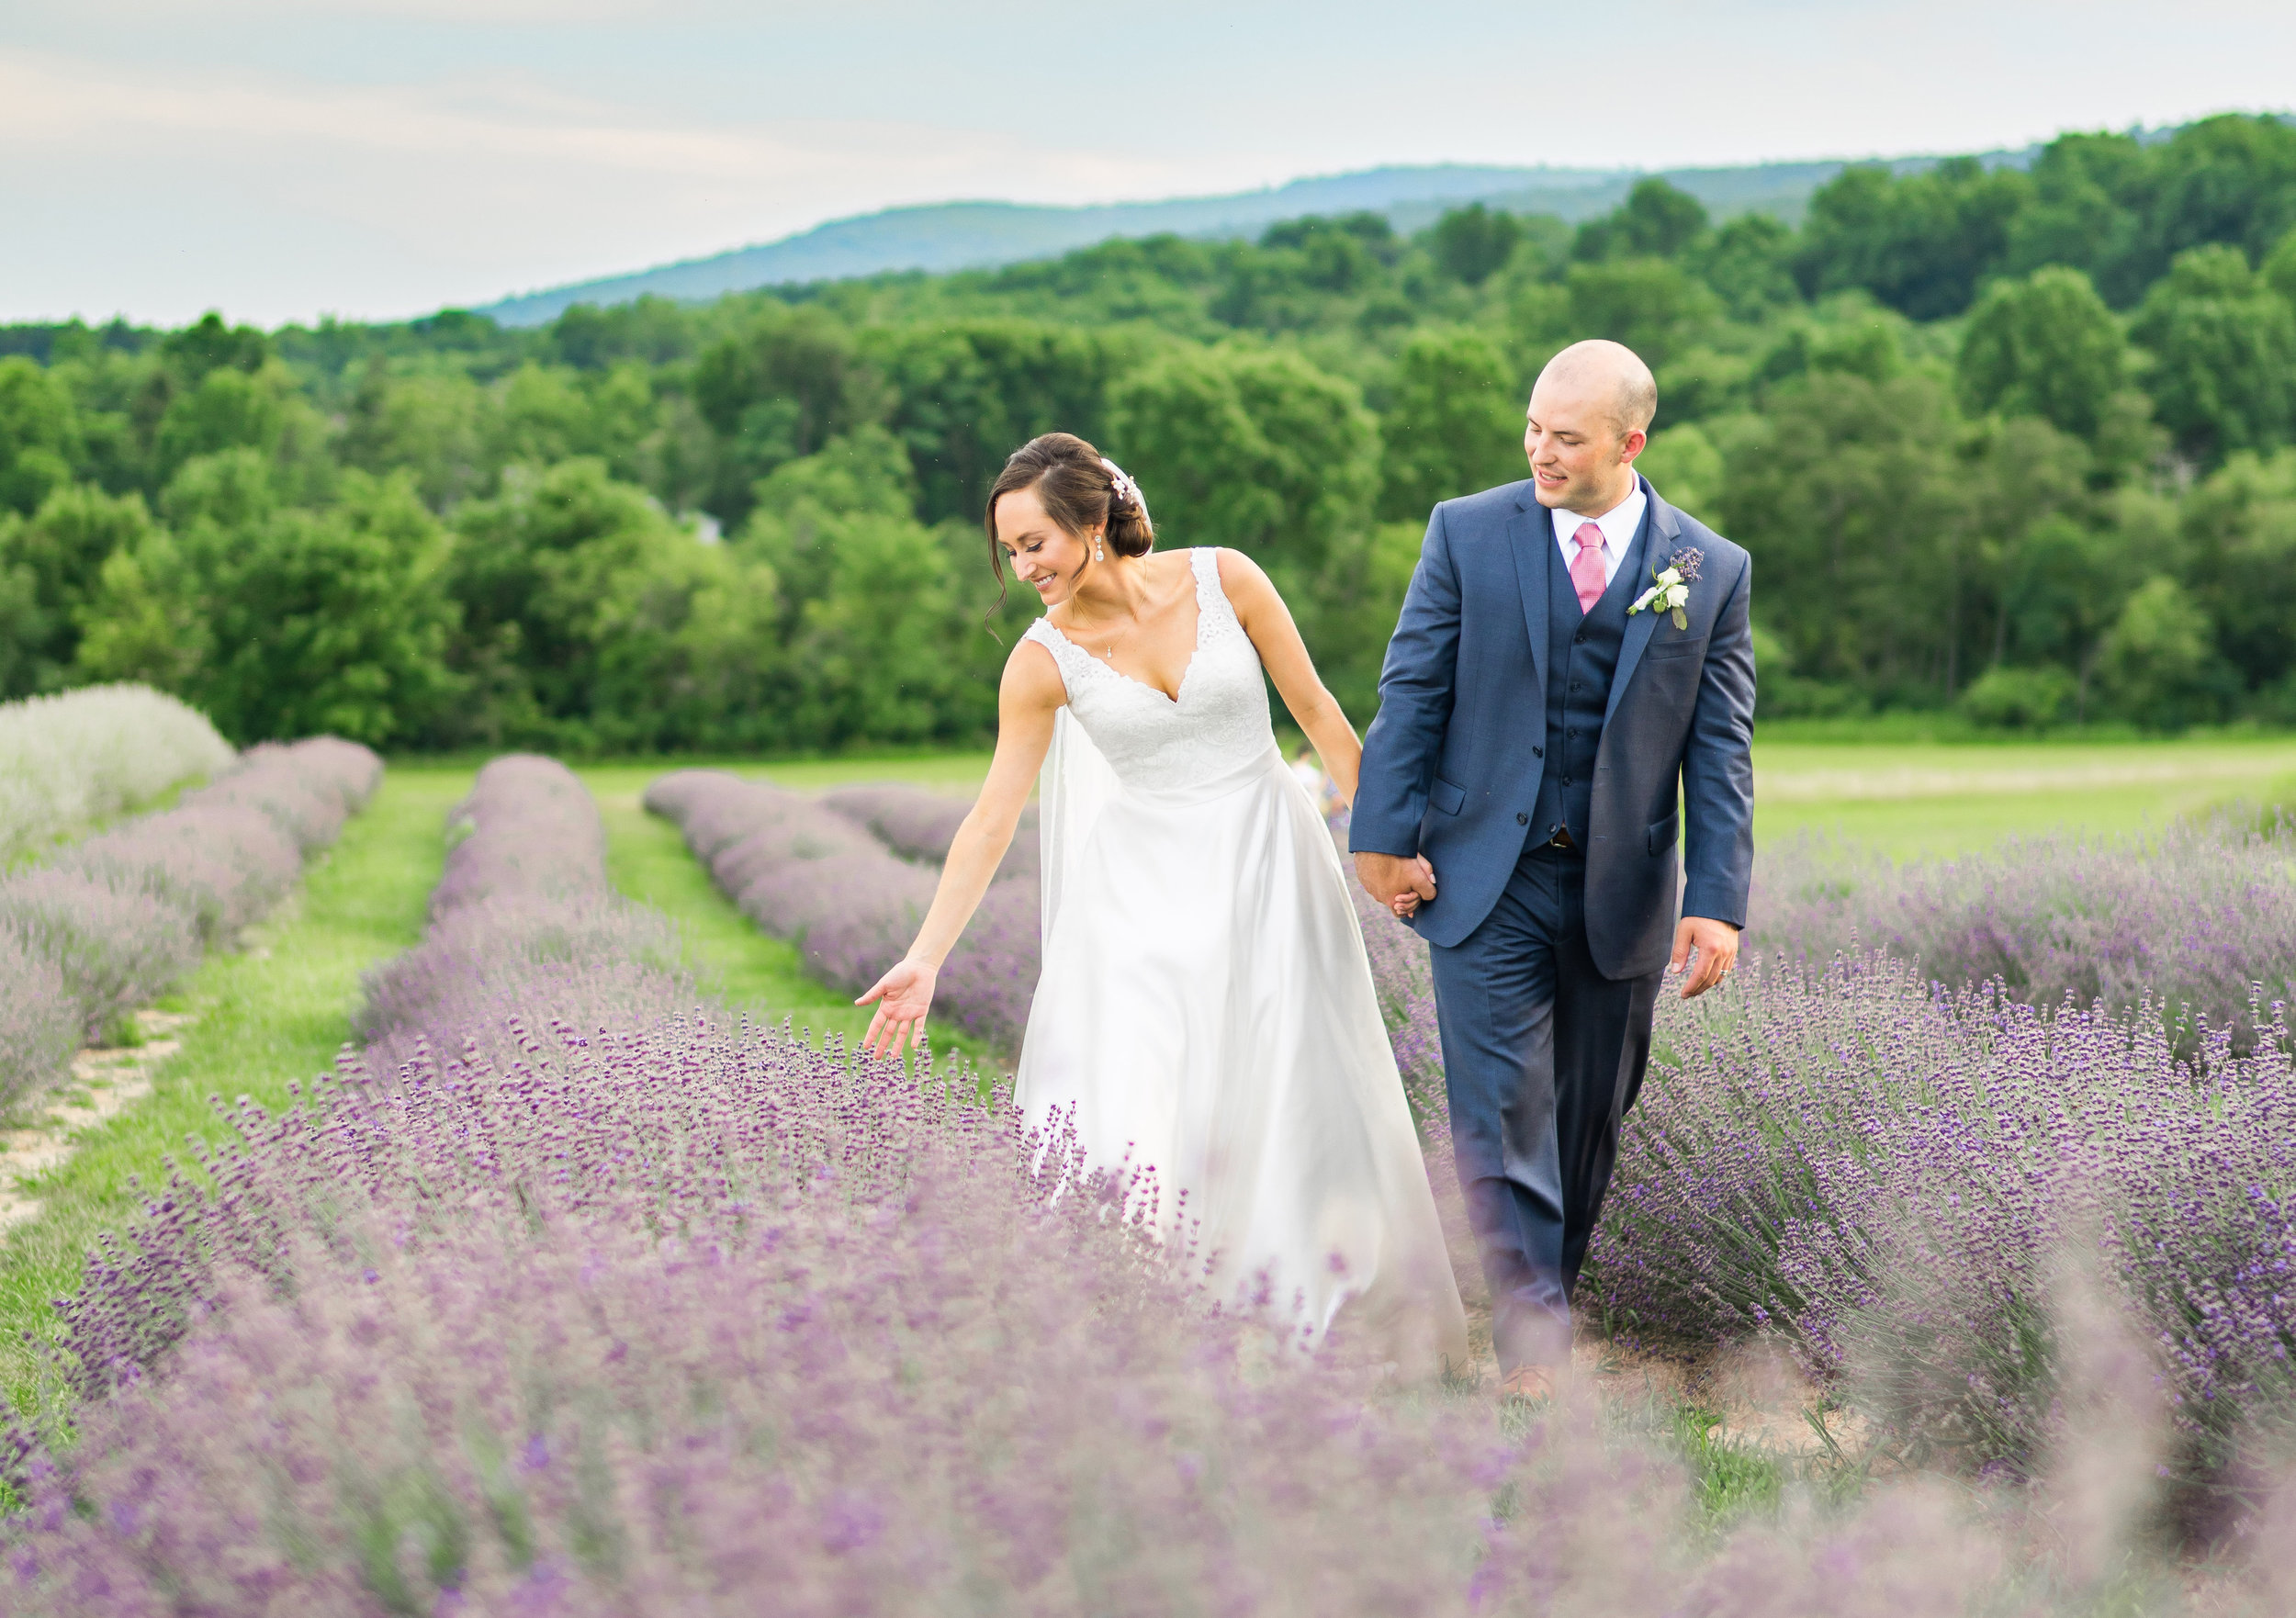 Springfield Manor Winery and Distillery wedding photos lavender